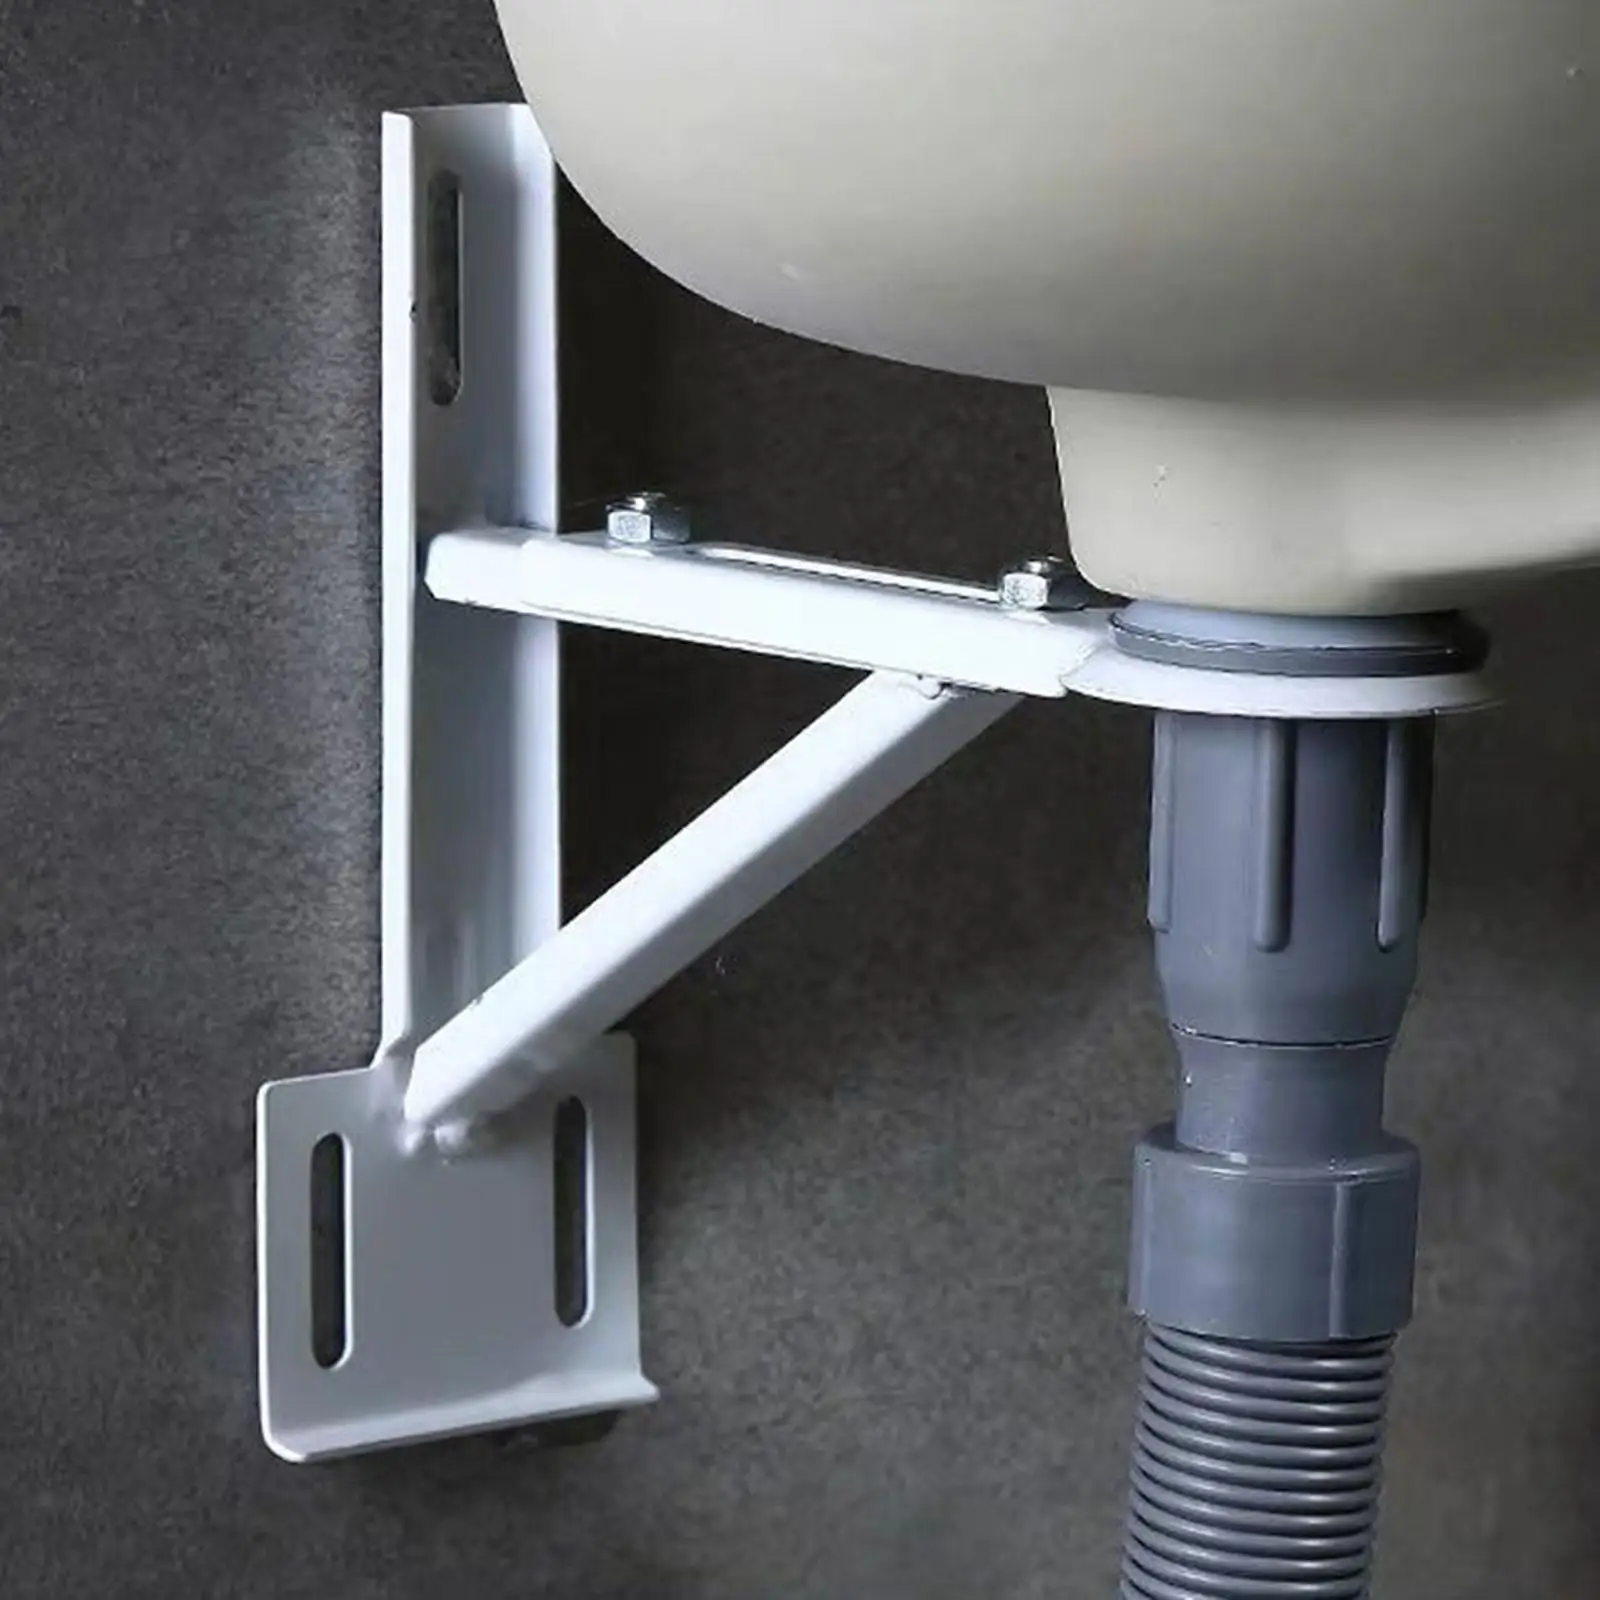 Undermount Sink Bracket Mounting Bracket Heavy Duty Adjustable for Home Use